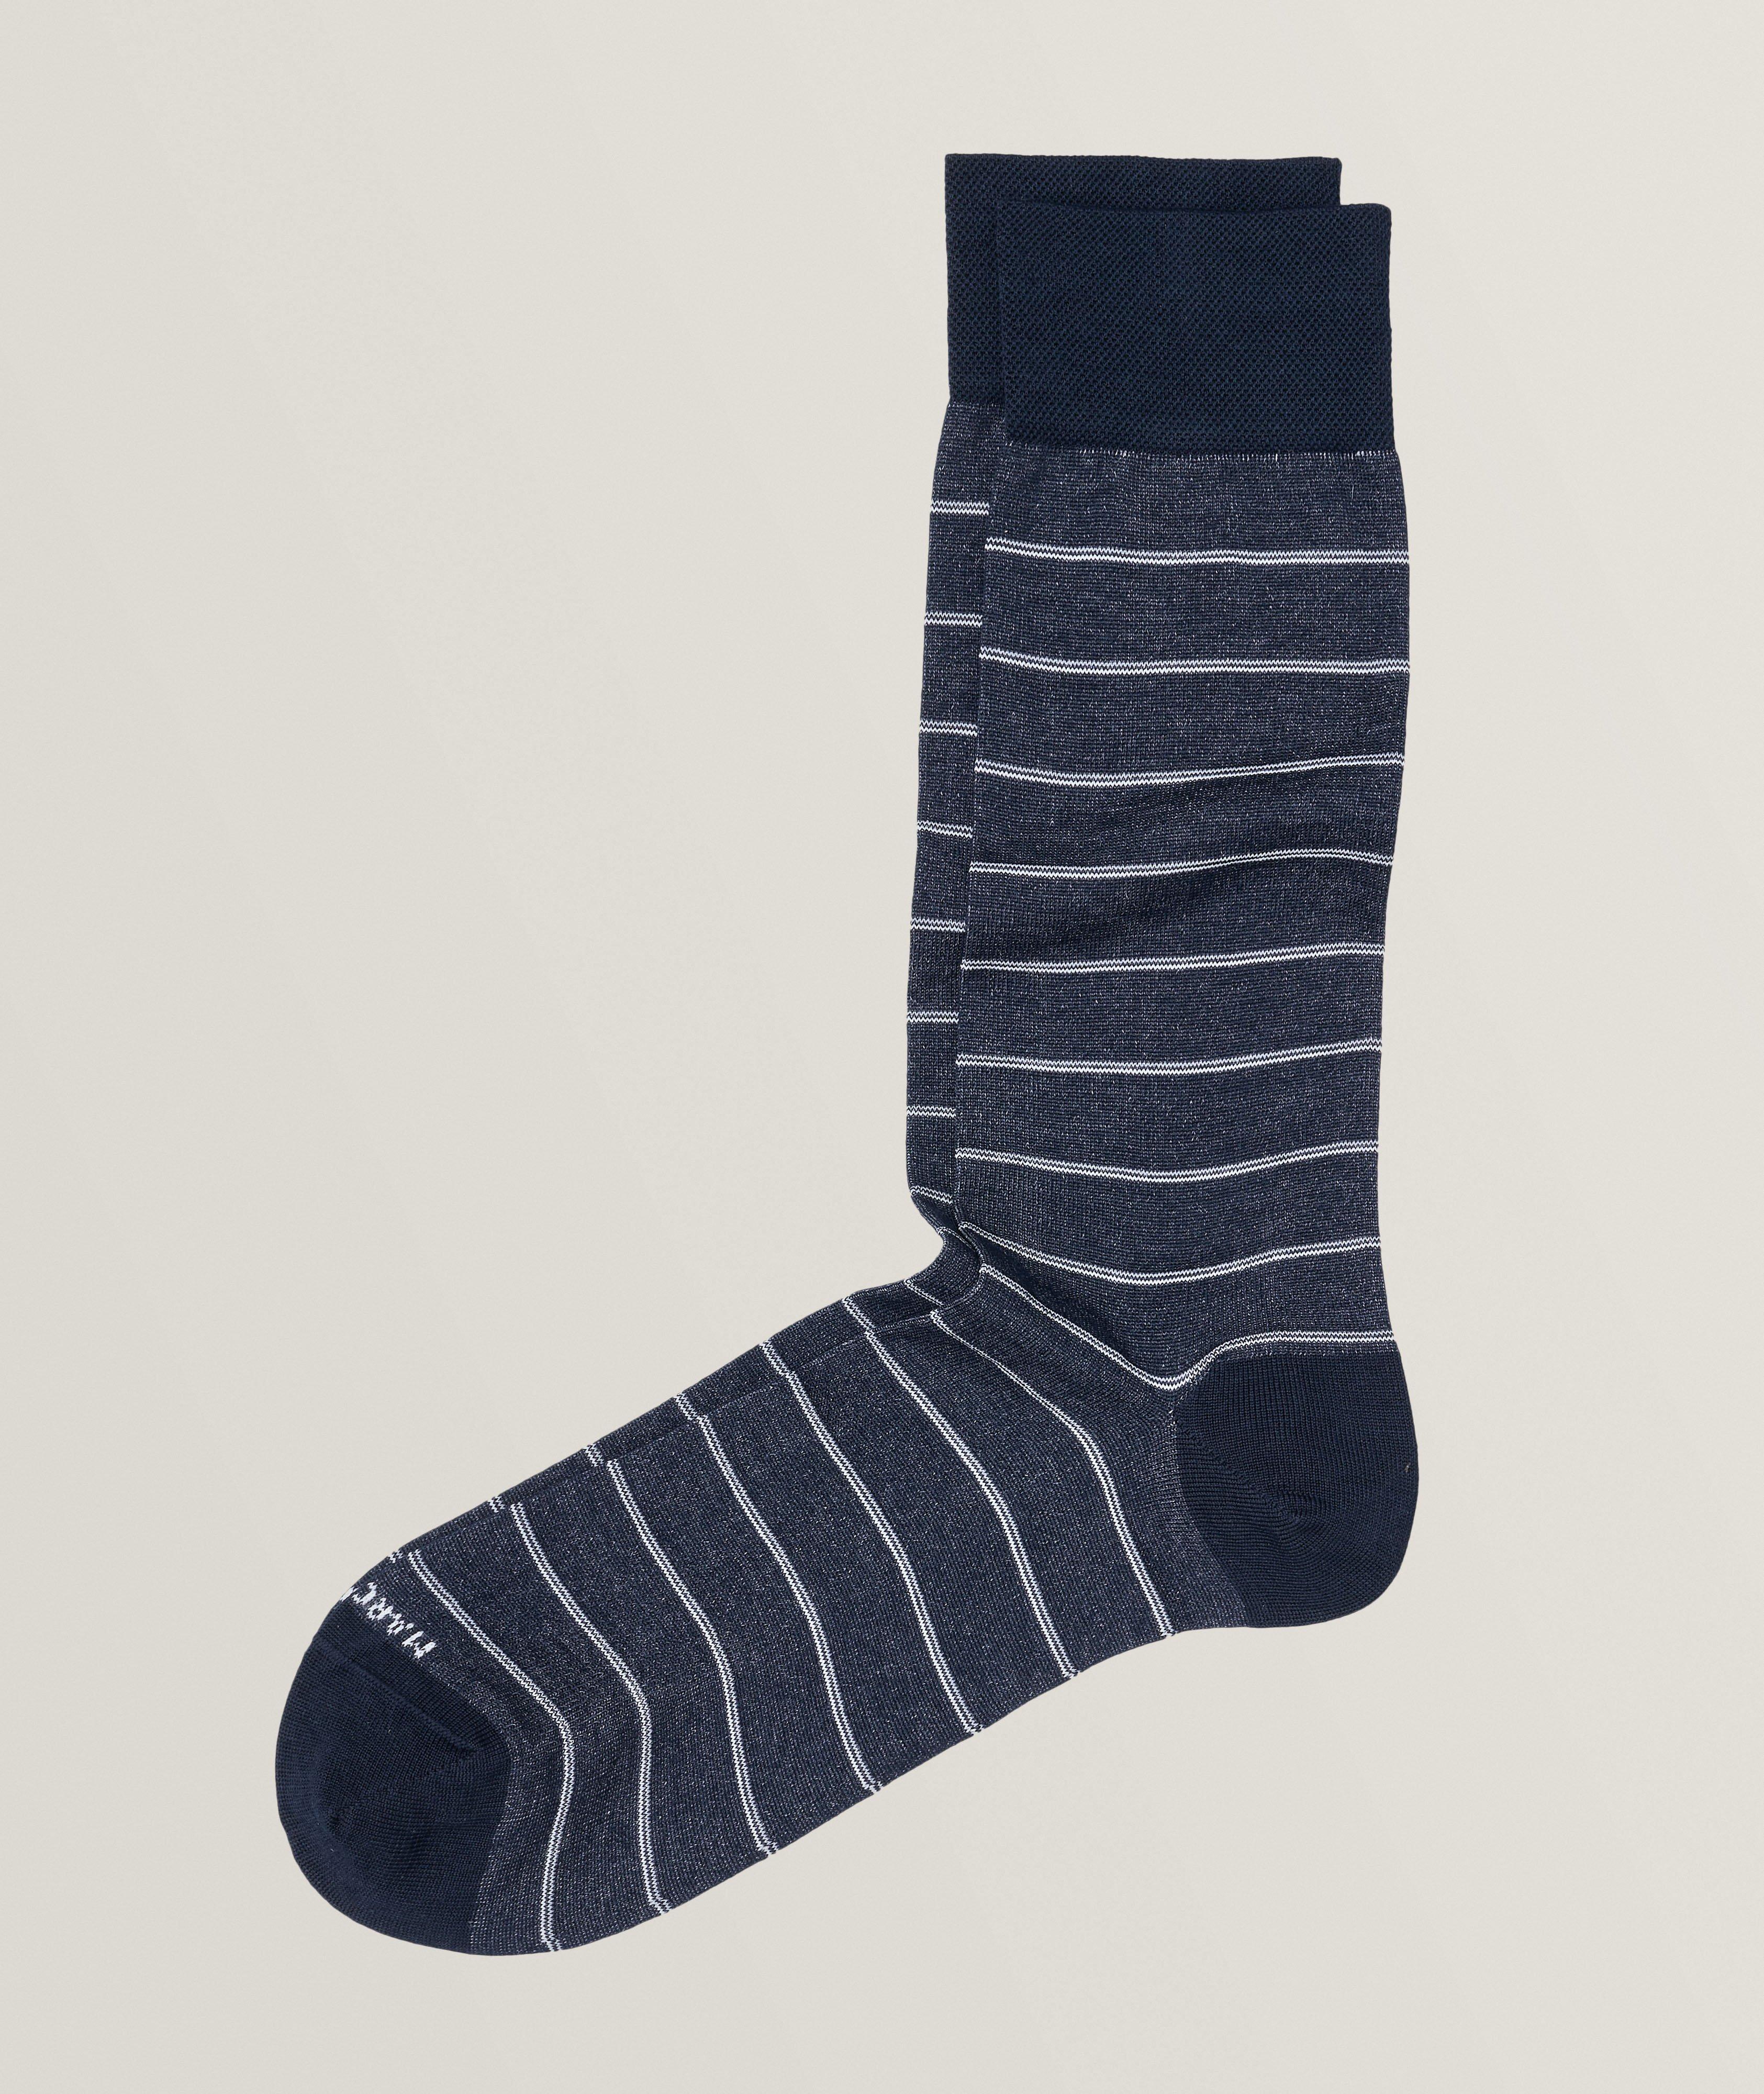 Micro Stripes Cotton Blend Crew Socks image 0